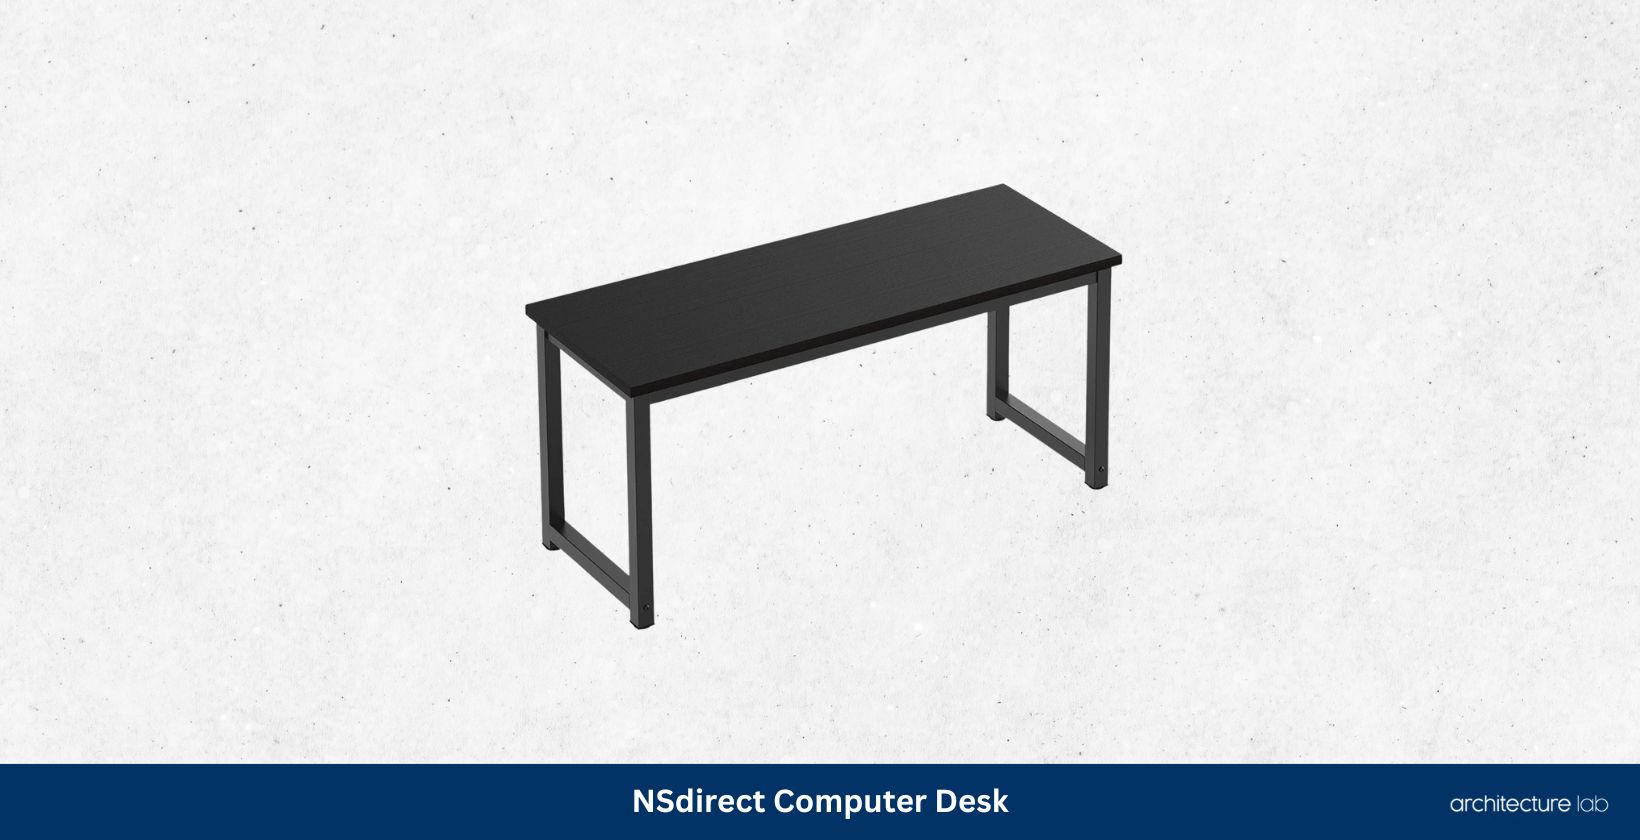 Nsdirect computer desk